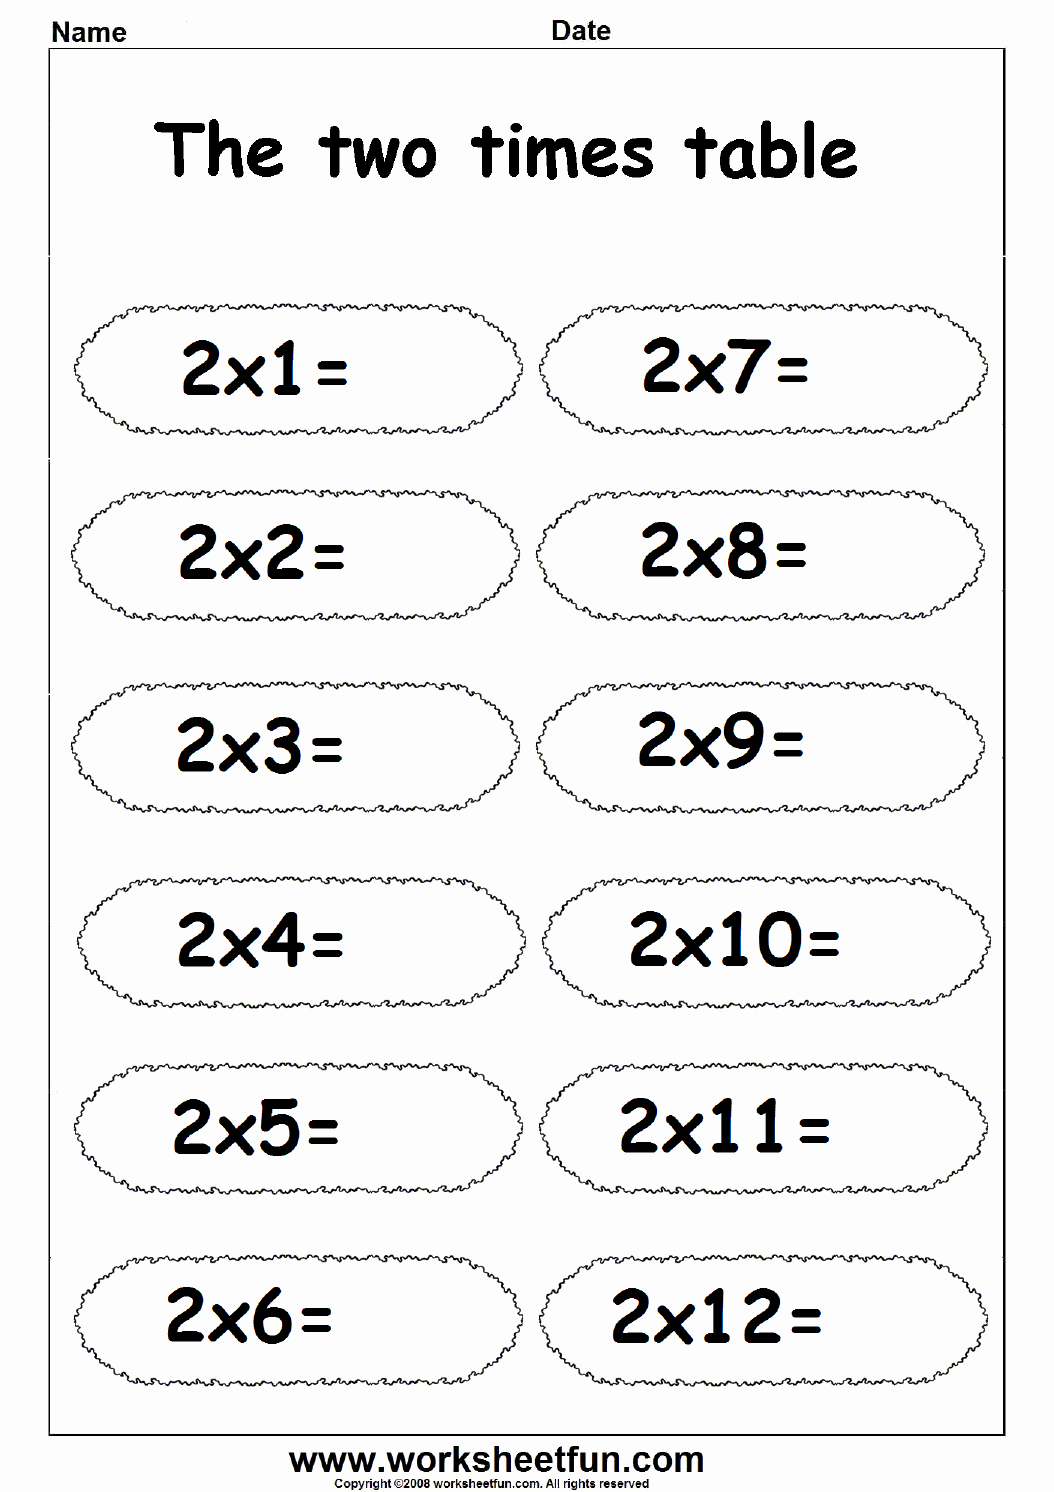 Multiplication Table Worksheet Luxury Multiplication Times Tables Worksheets – 2 3 4 6 7 8